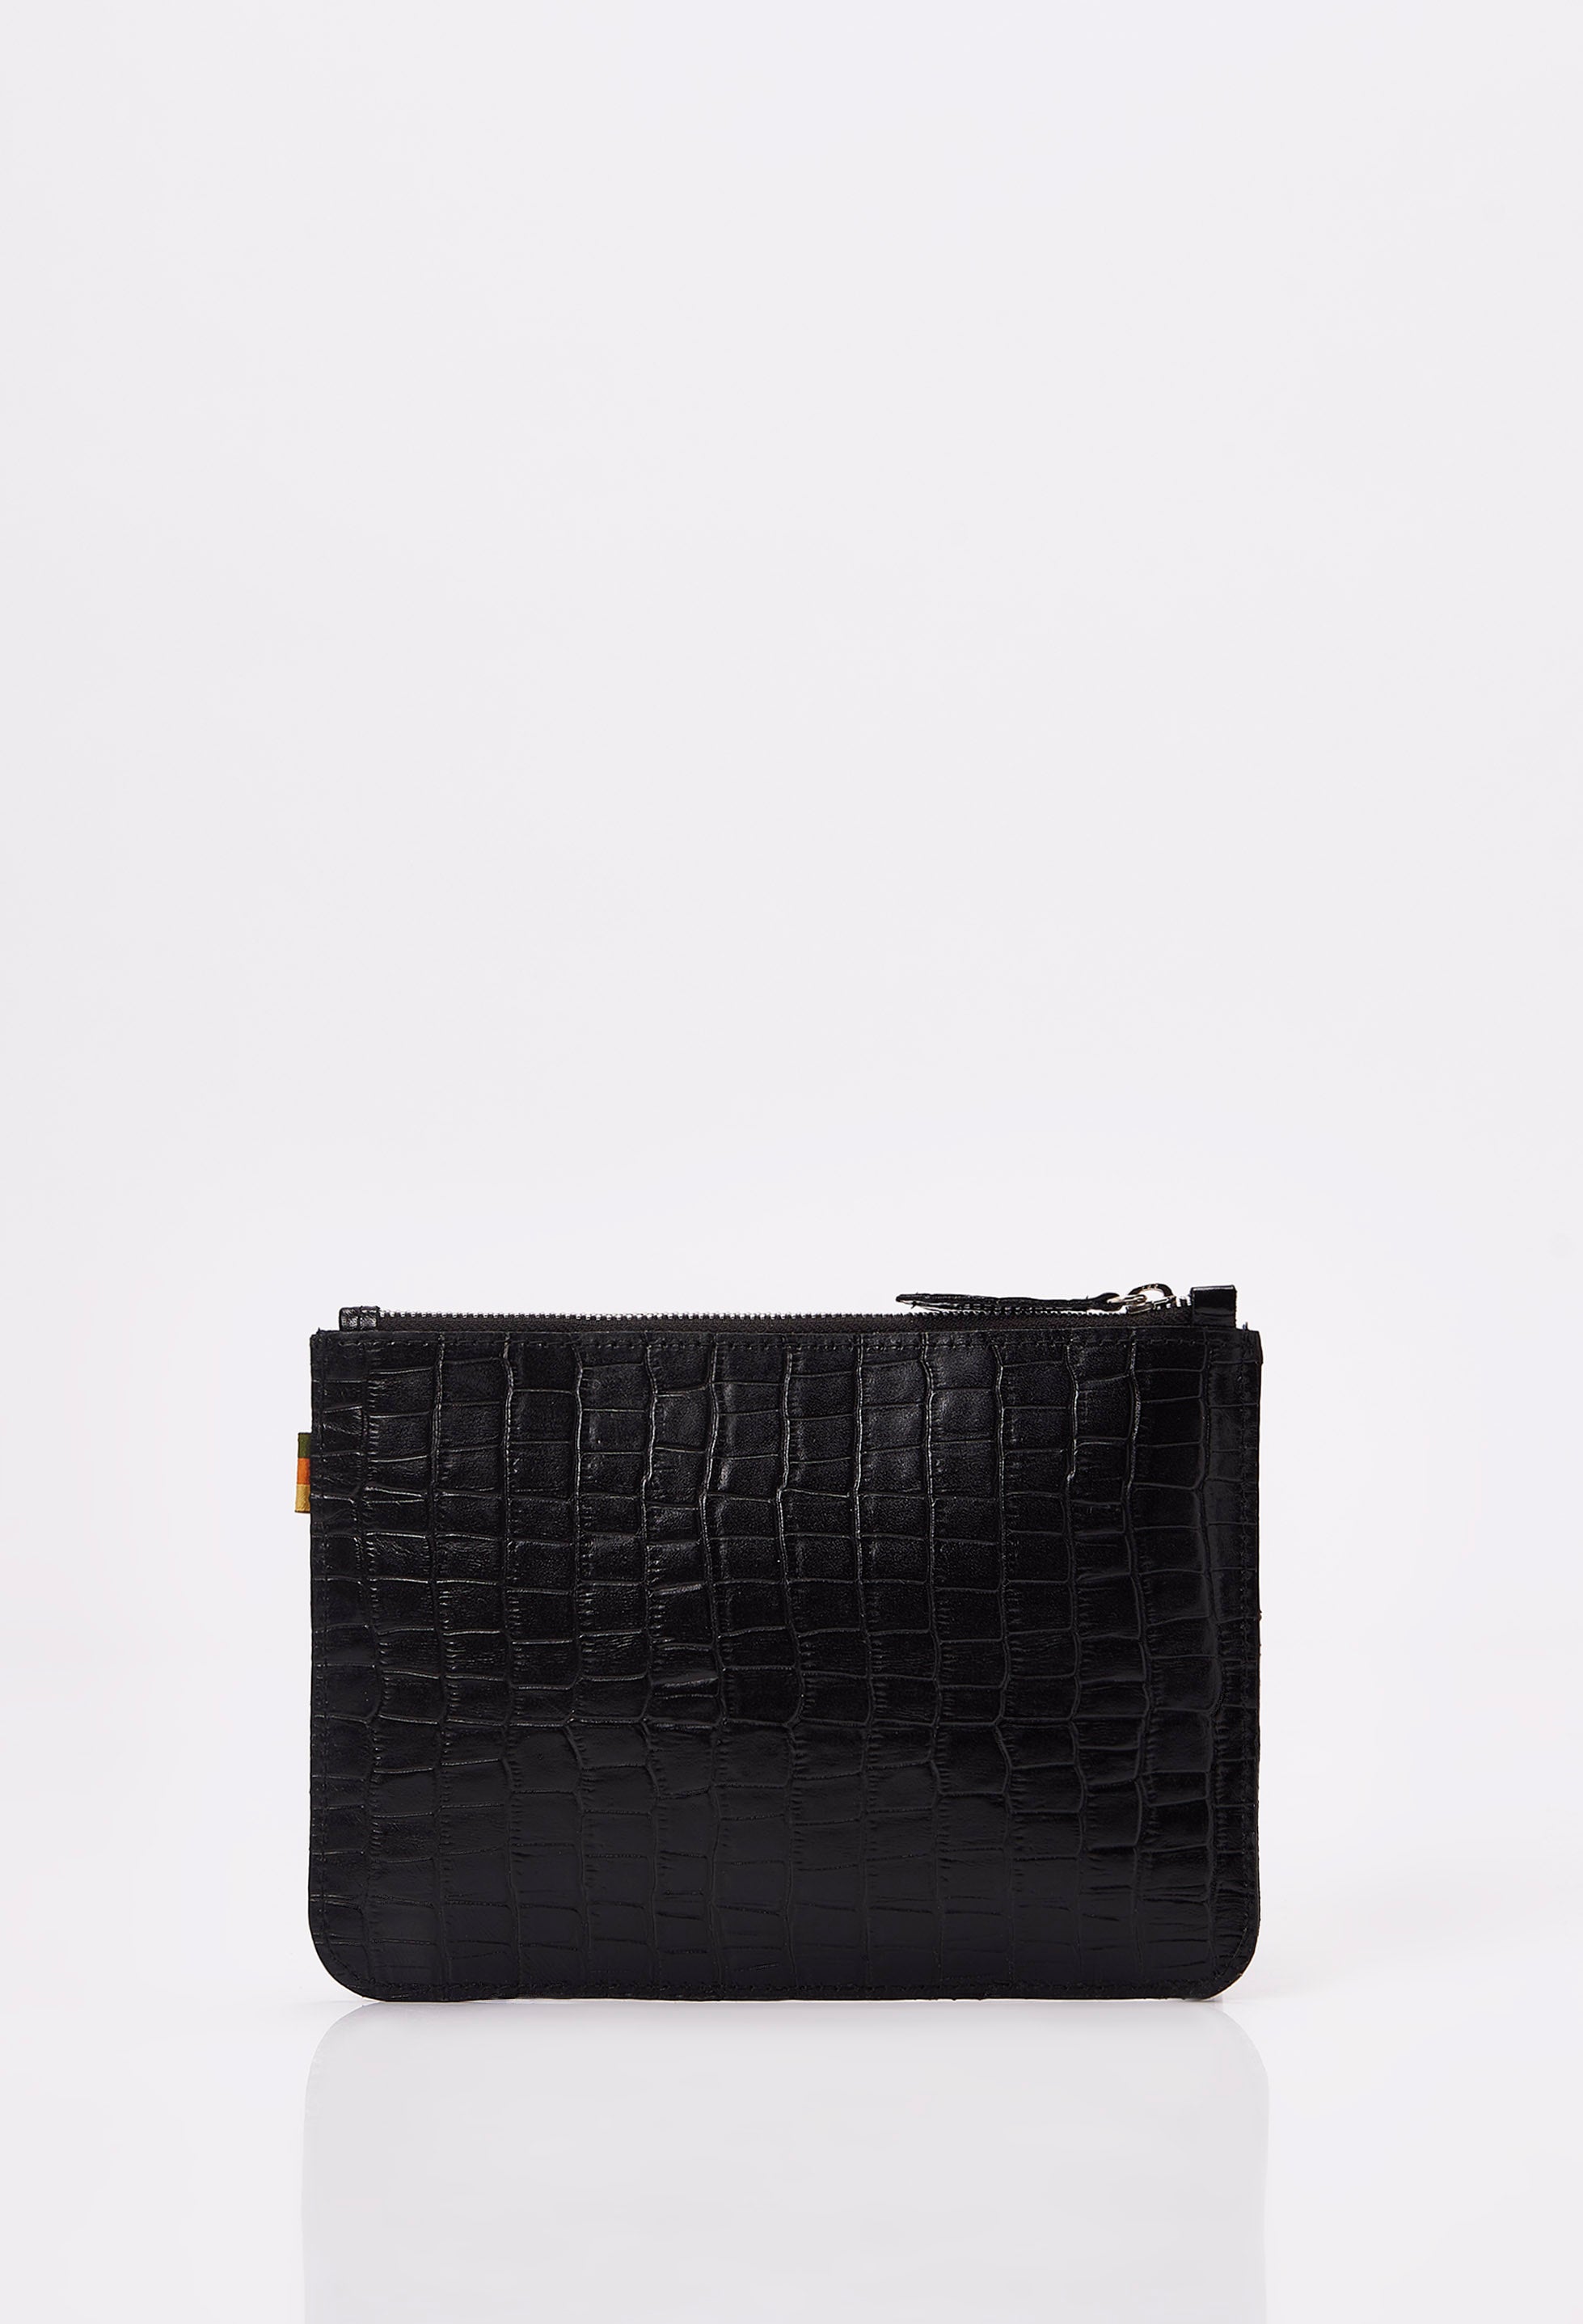 Rear of a Black Croco Leather Zipper Pouch.